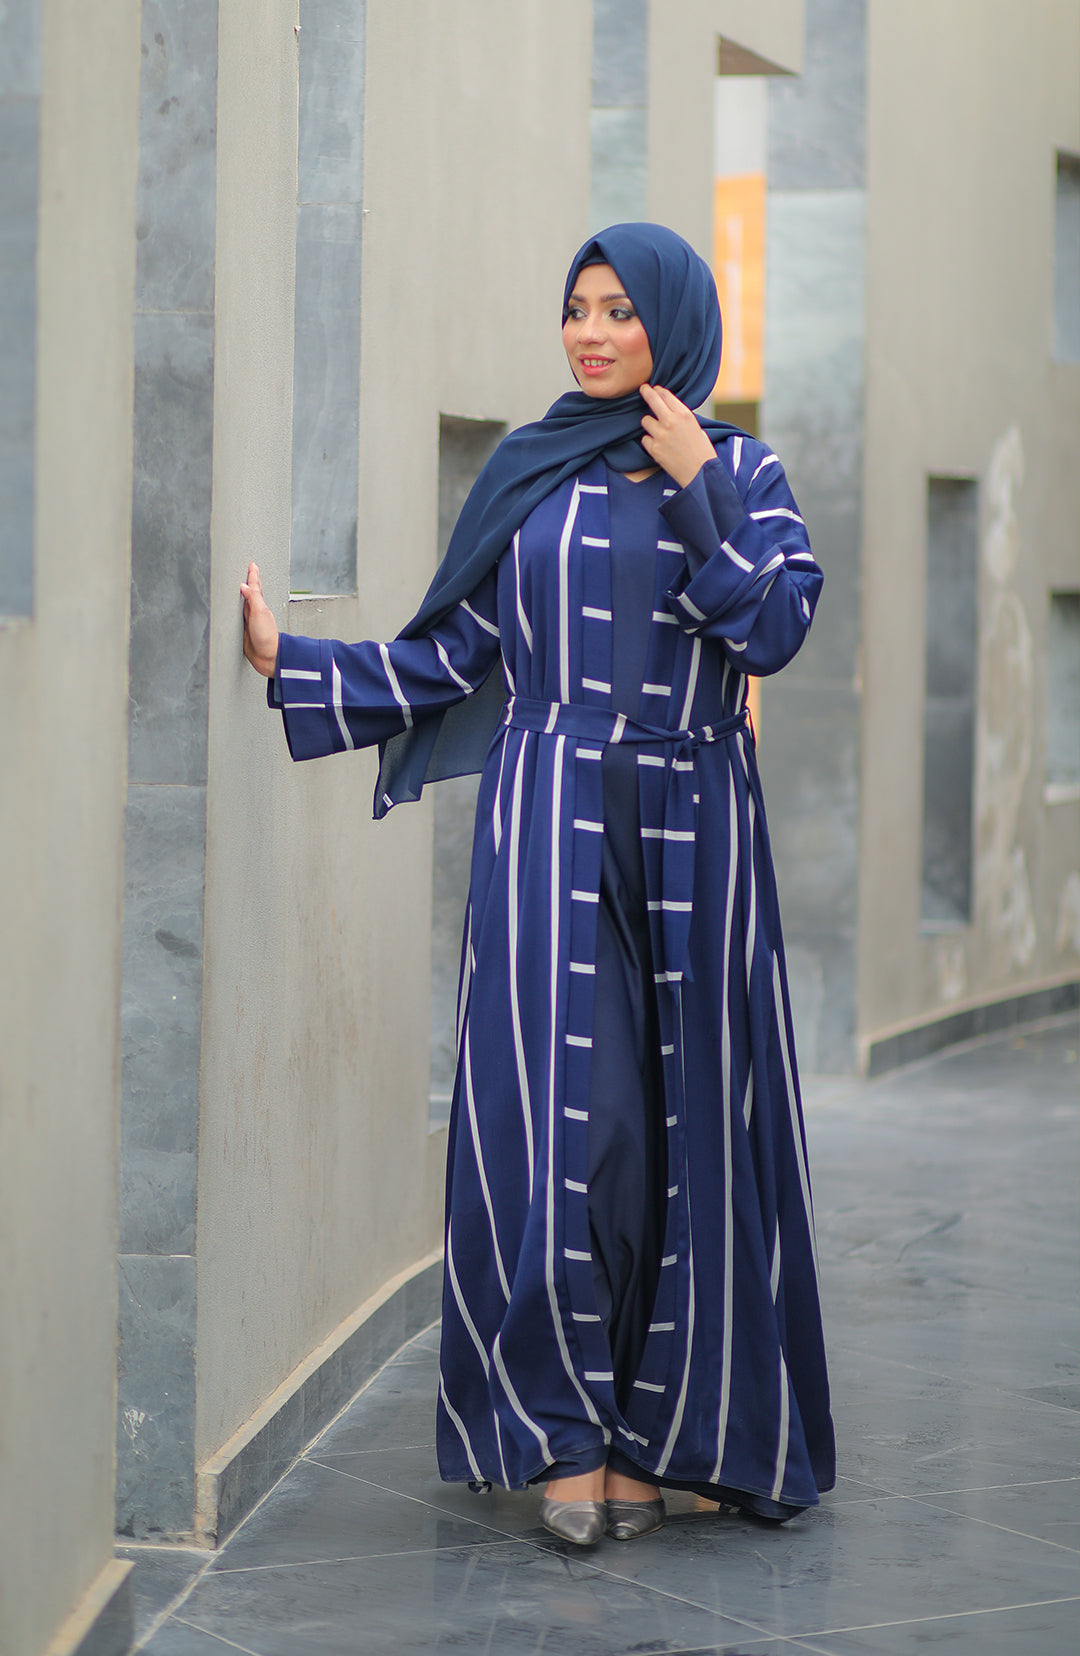 stylish blue kimono in pakistan